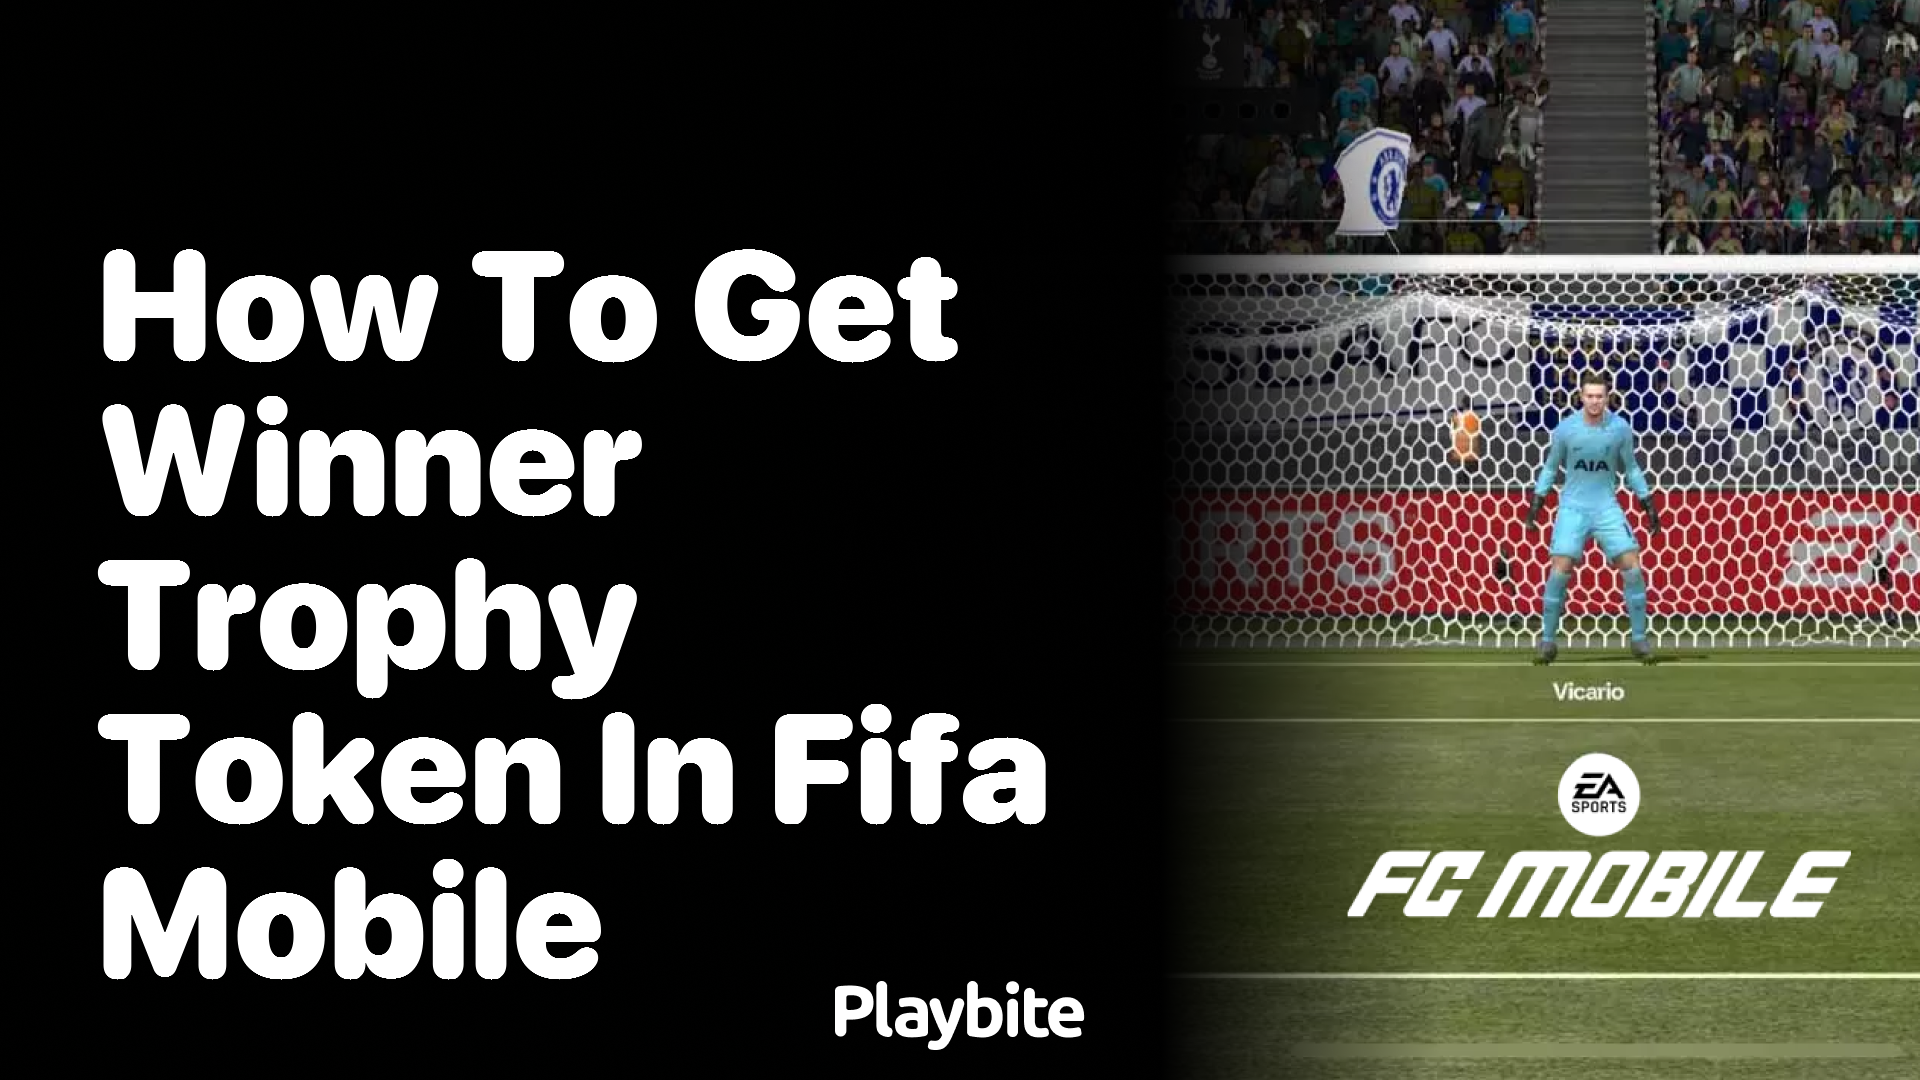 How to Get the Winner Trophy Token in FIFA Mobile